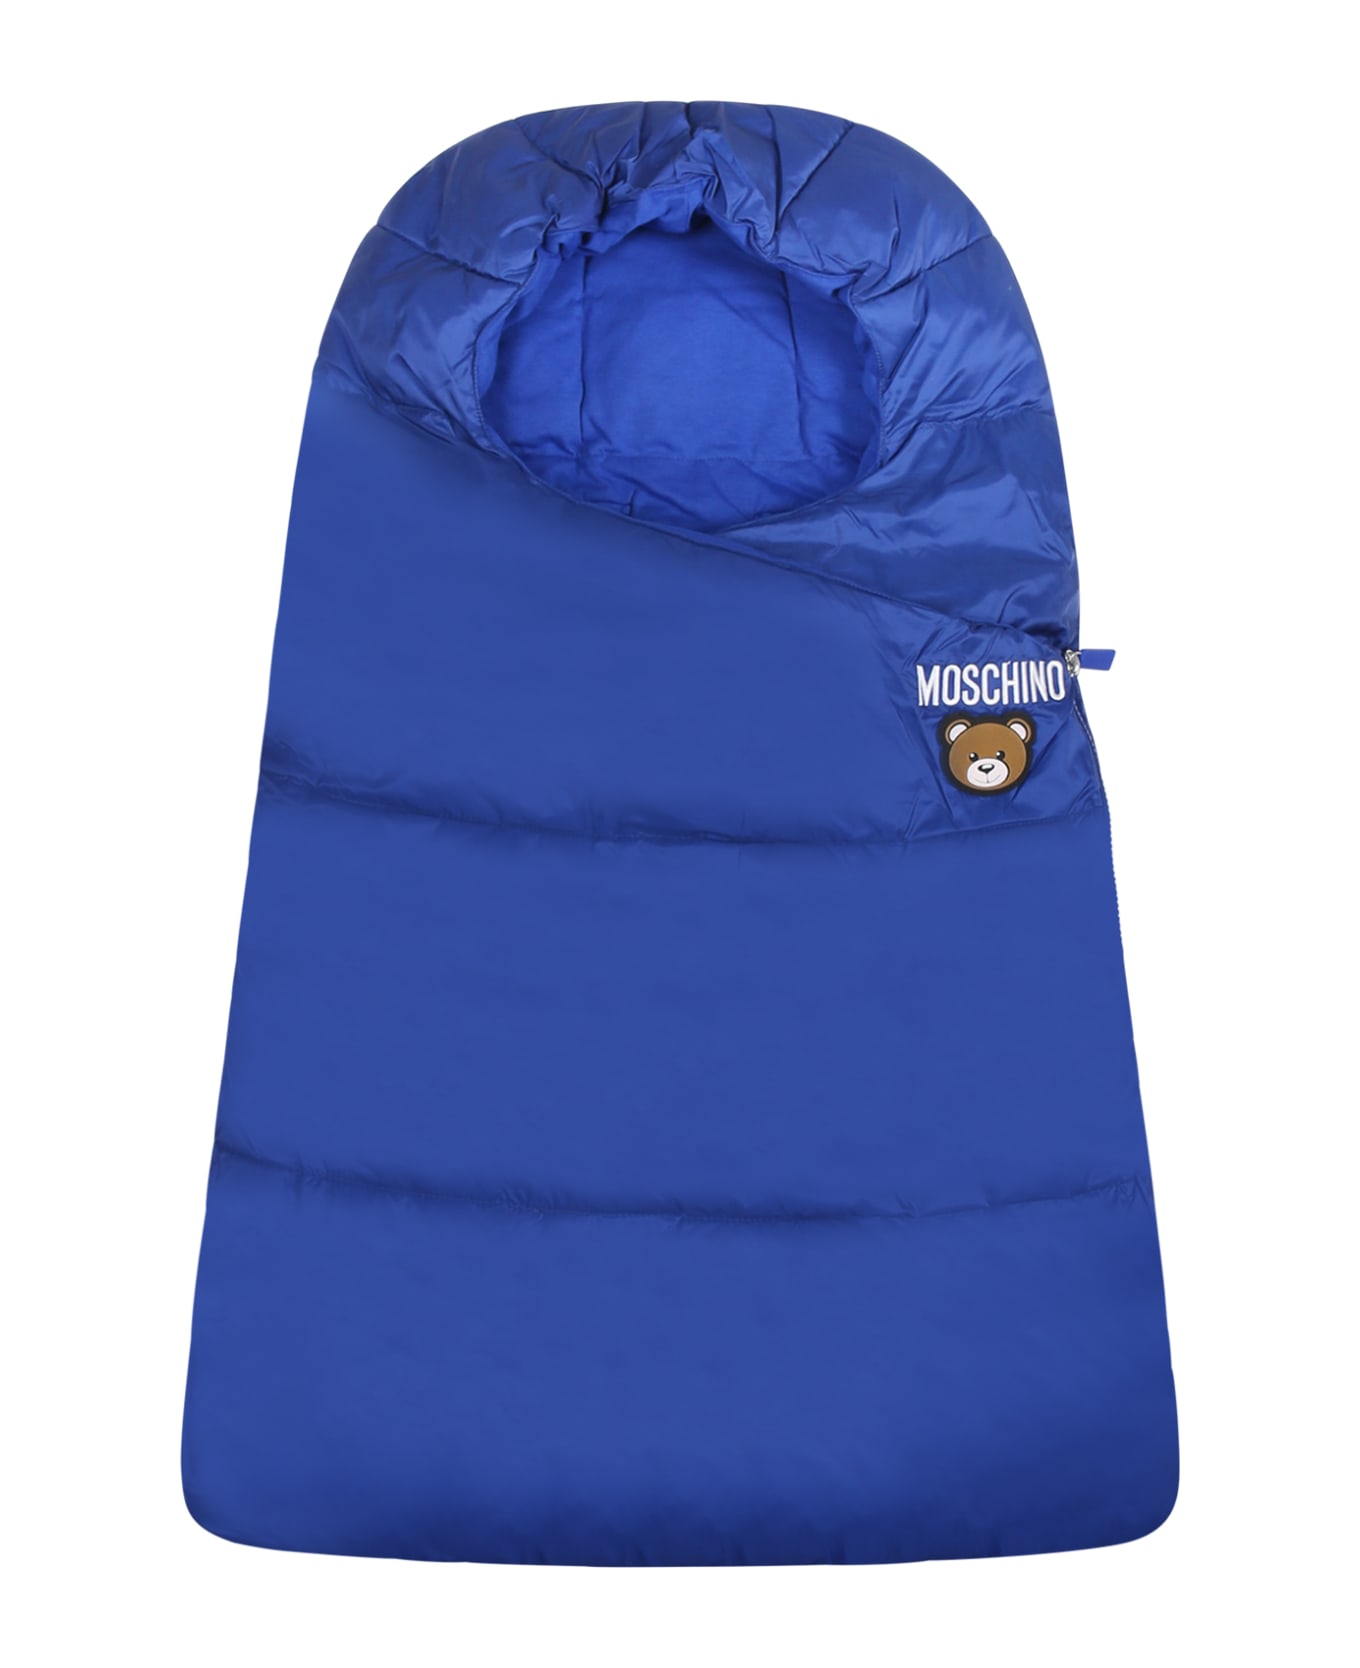 Moschino Blue Sleeping Bag zebra For Baby Boy With Teddy Bear And Logo - Light Blue